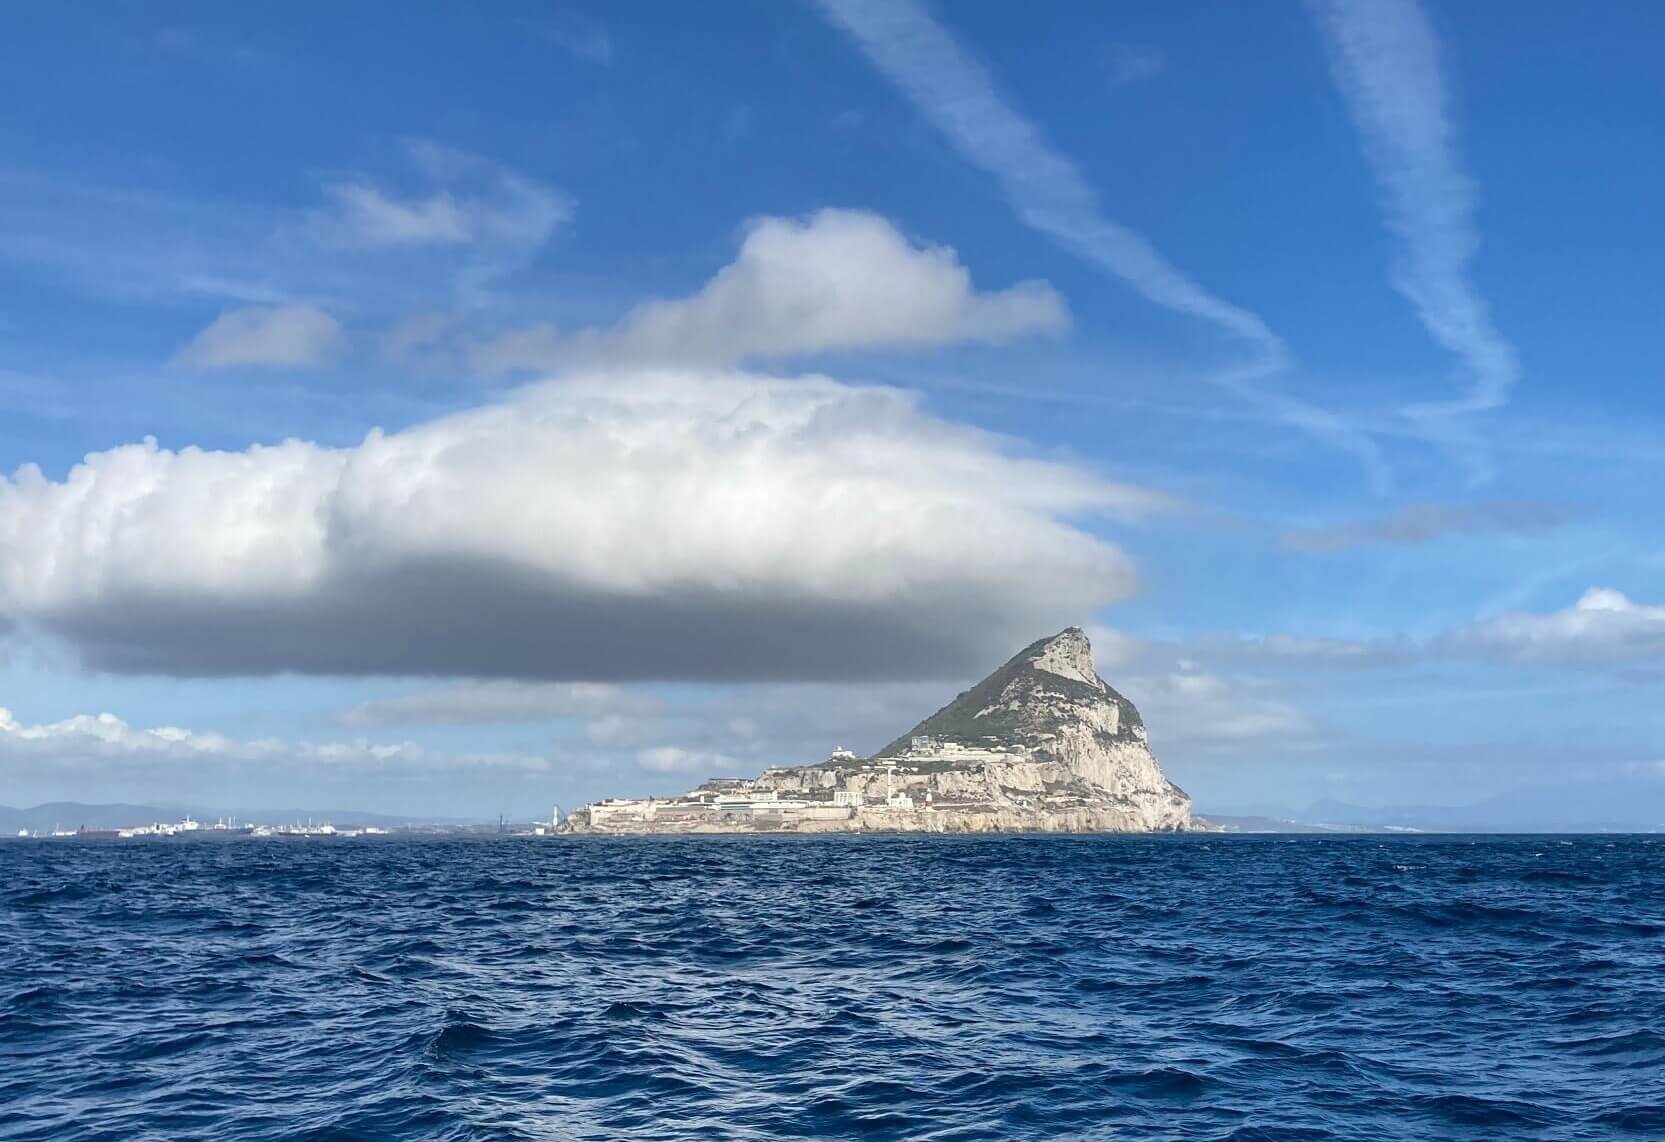 Rounding the Gibraltar Rock.